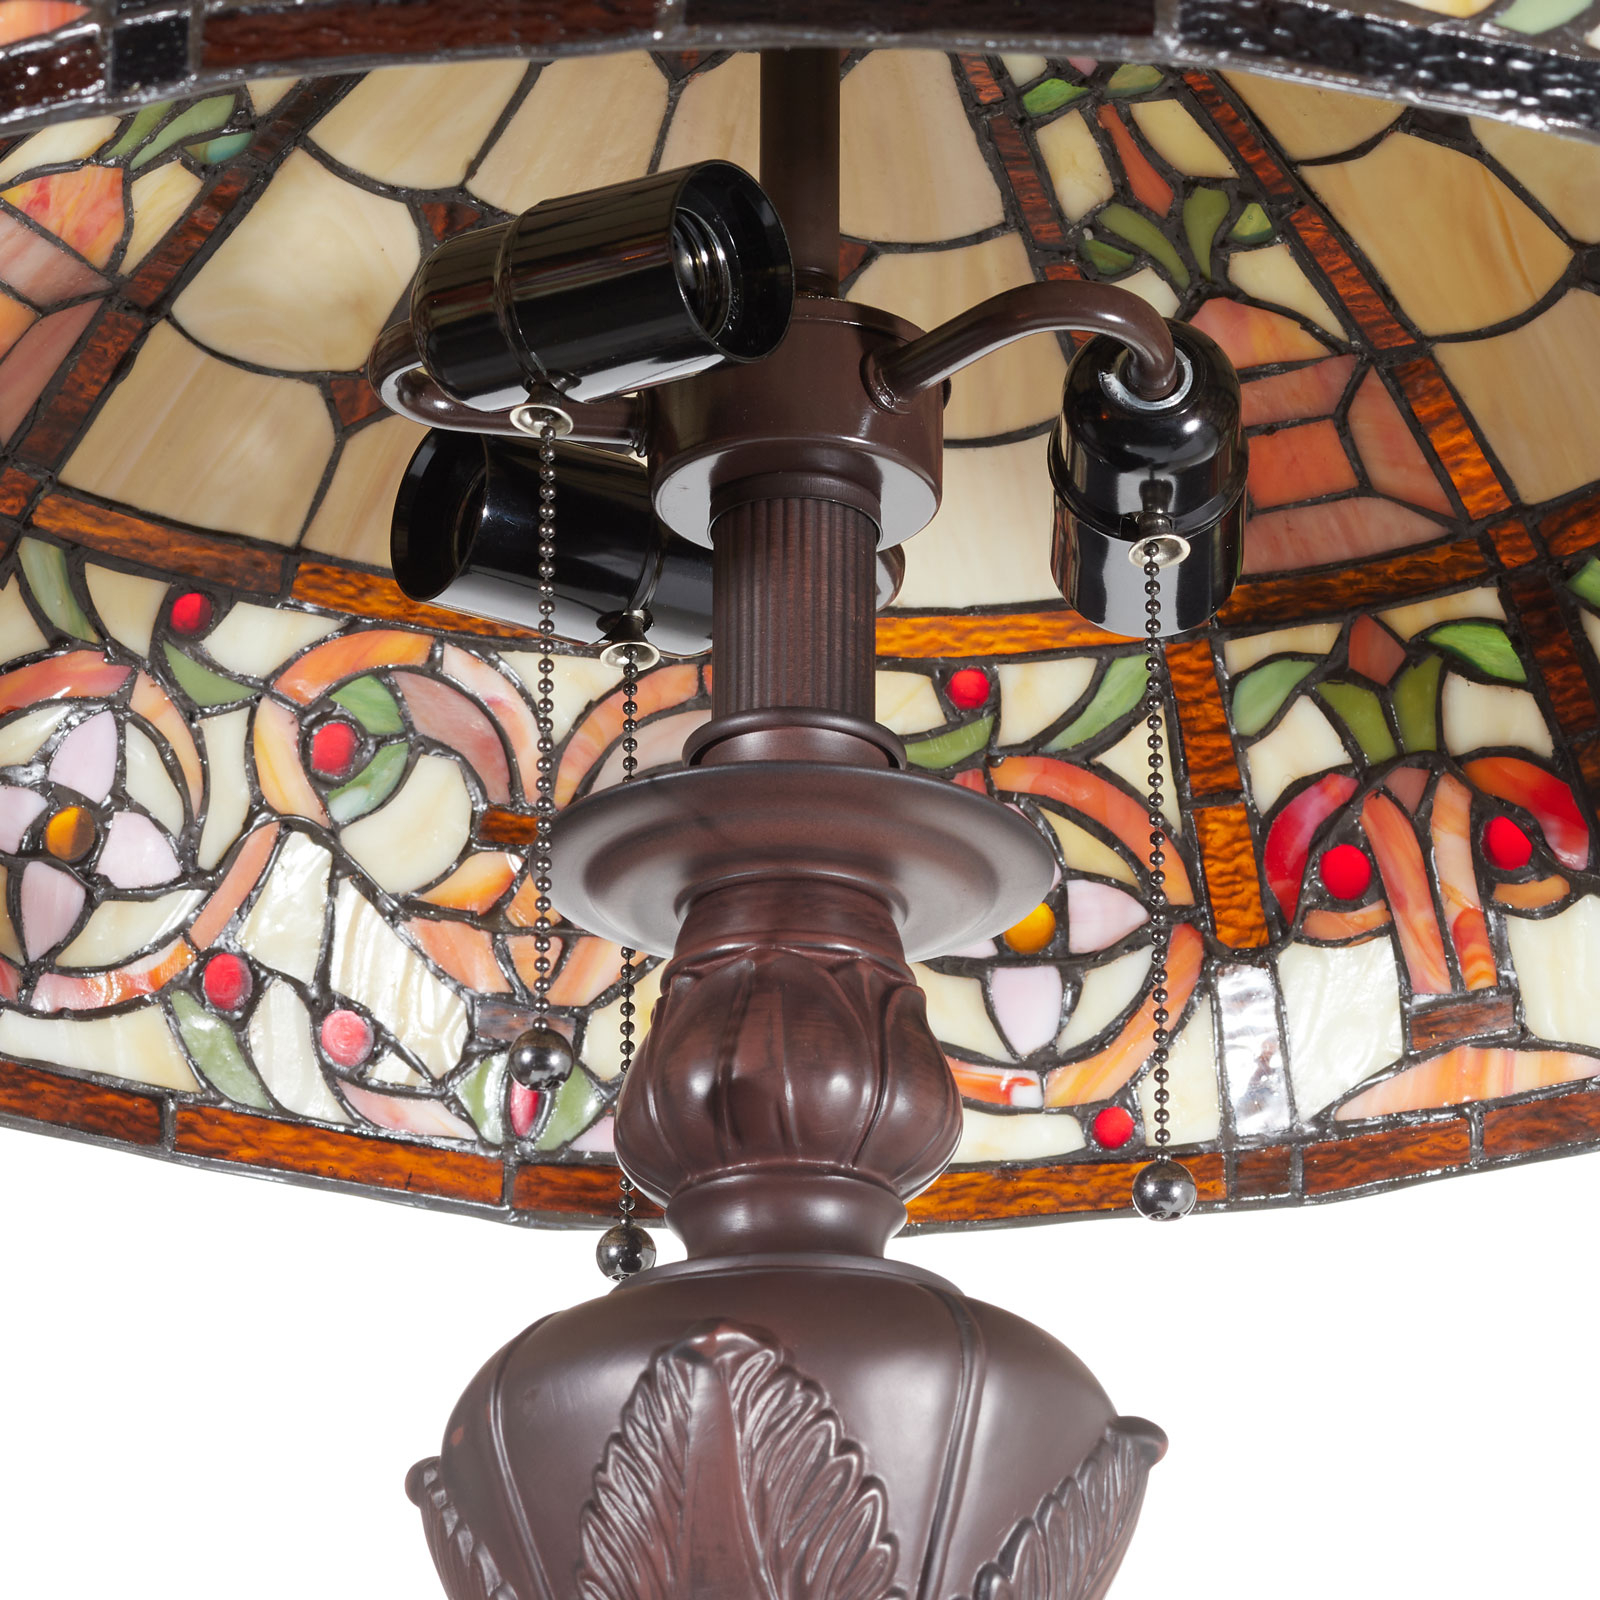 Luxusná stojaca lampa Lindsay v štýle Tiffany